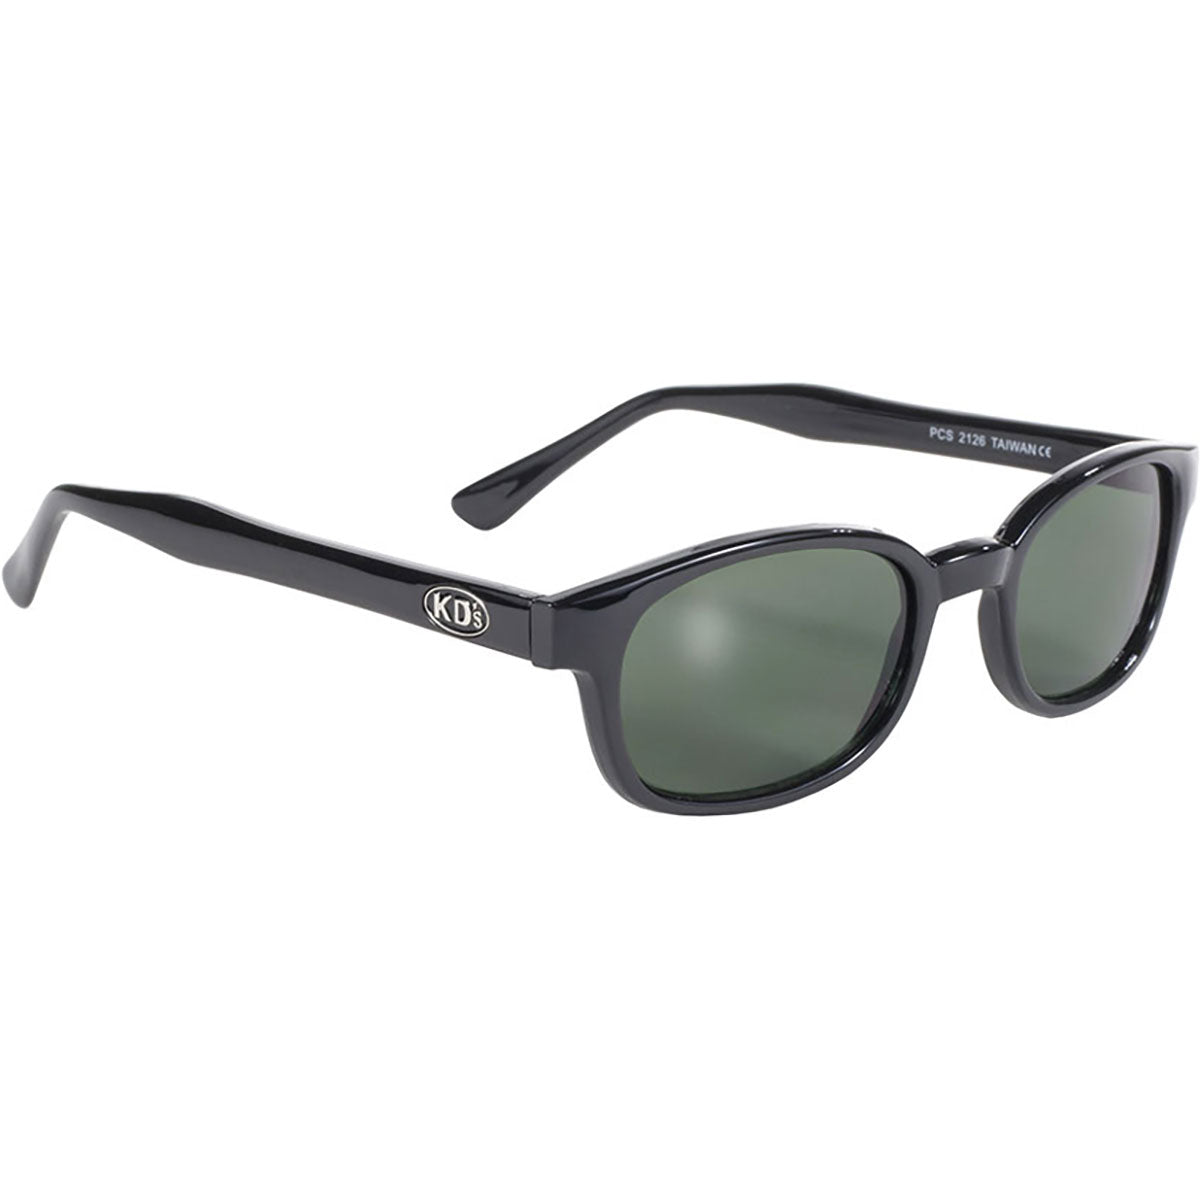 KD Original Adult Lifestyle Sunglasses-2126